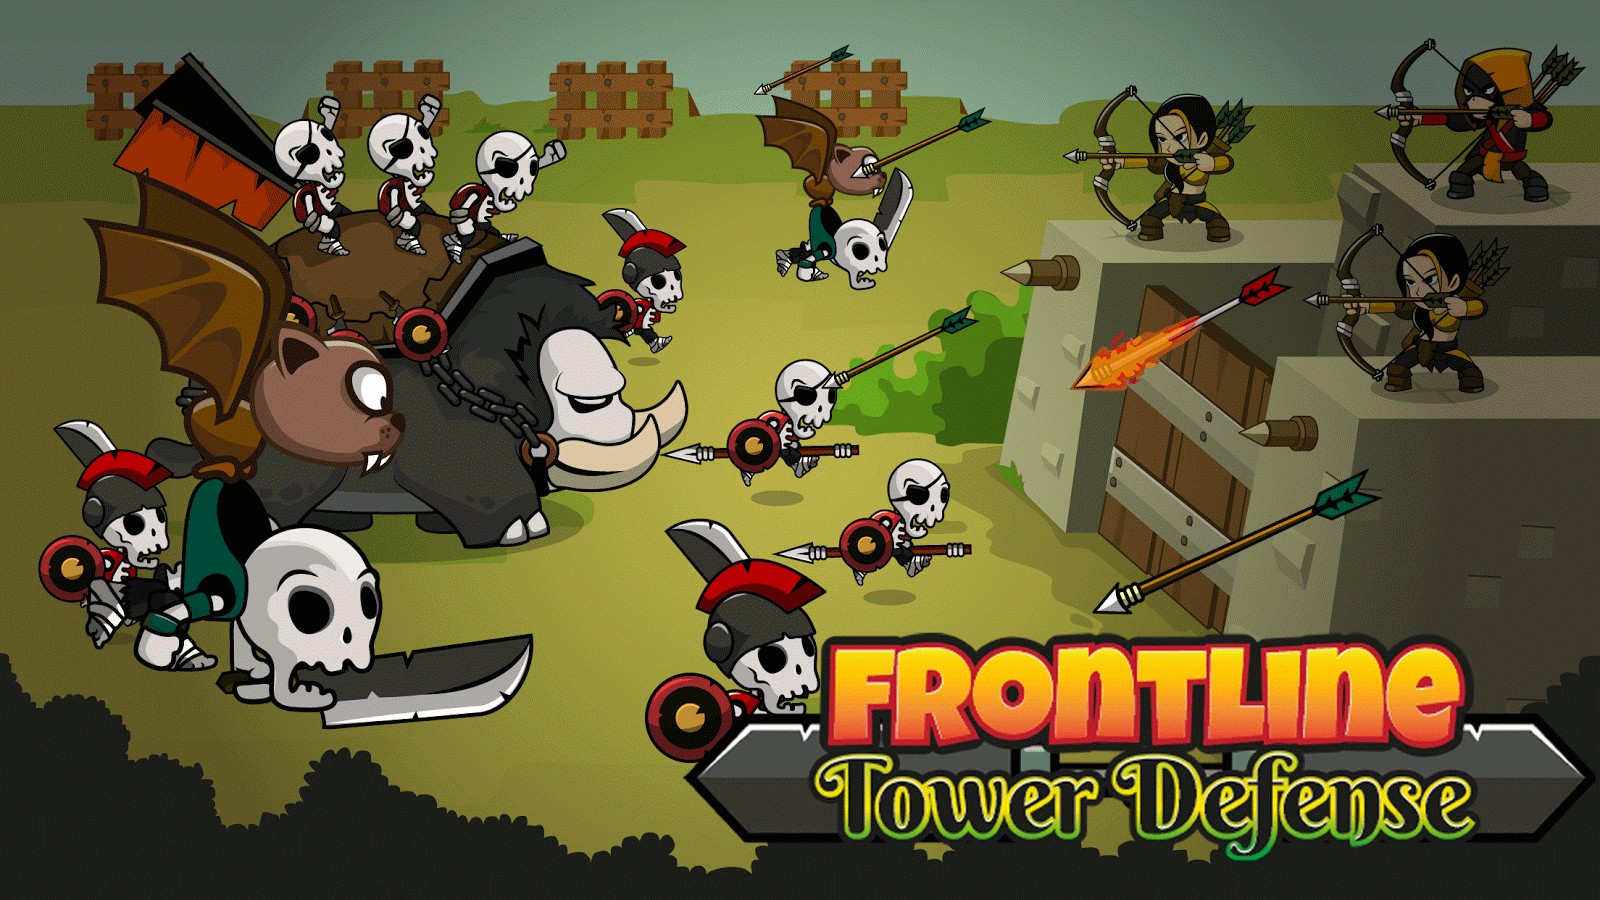 Frontline Tower Defense